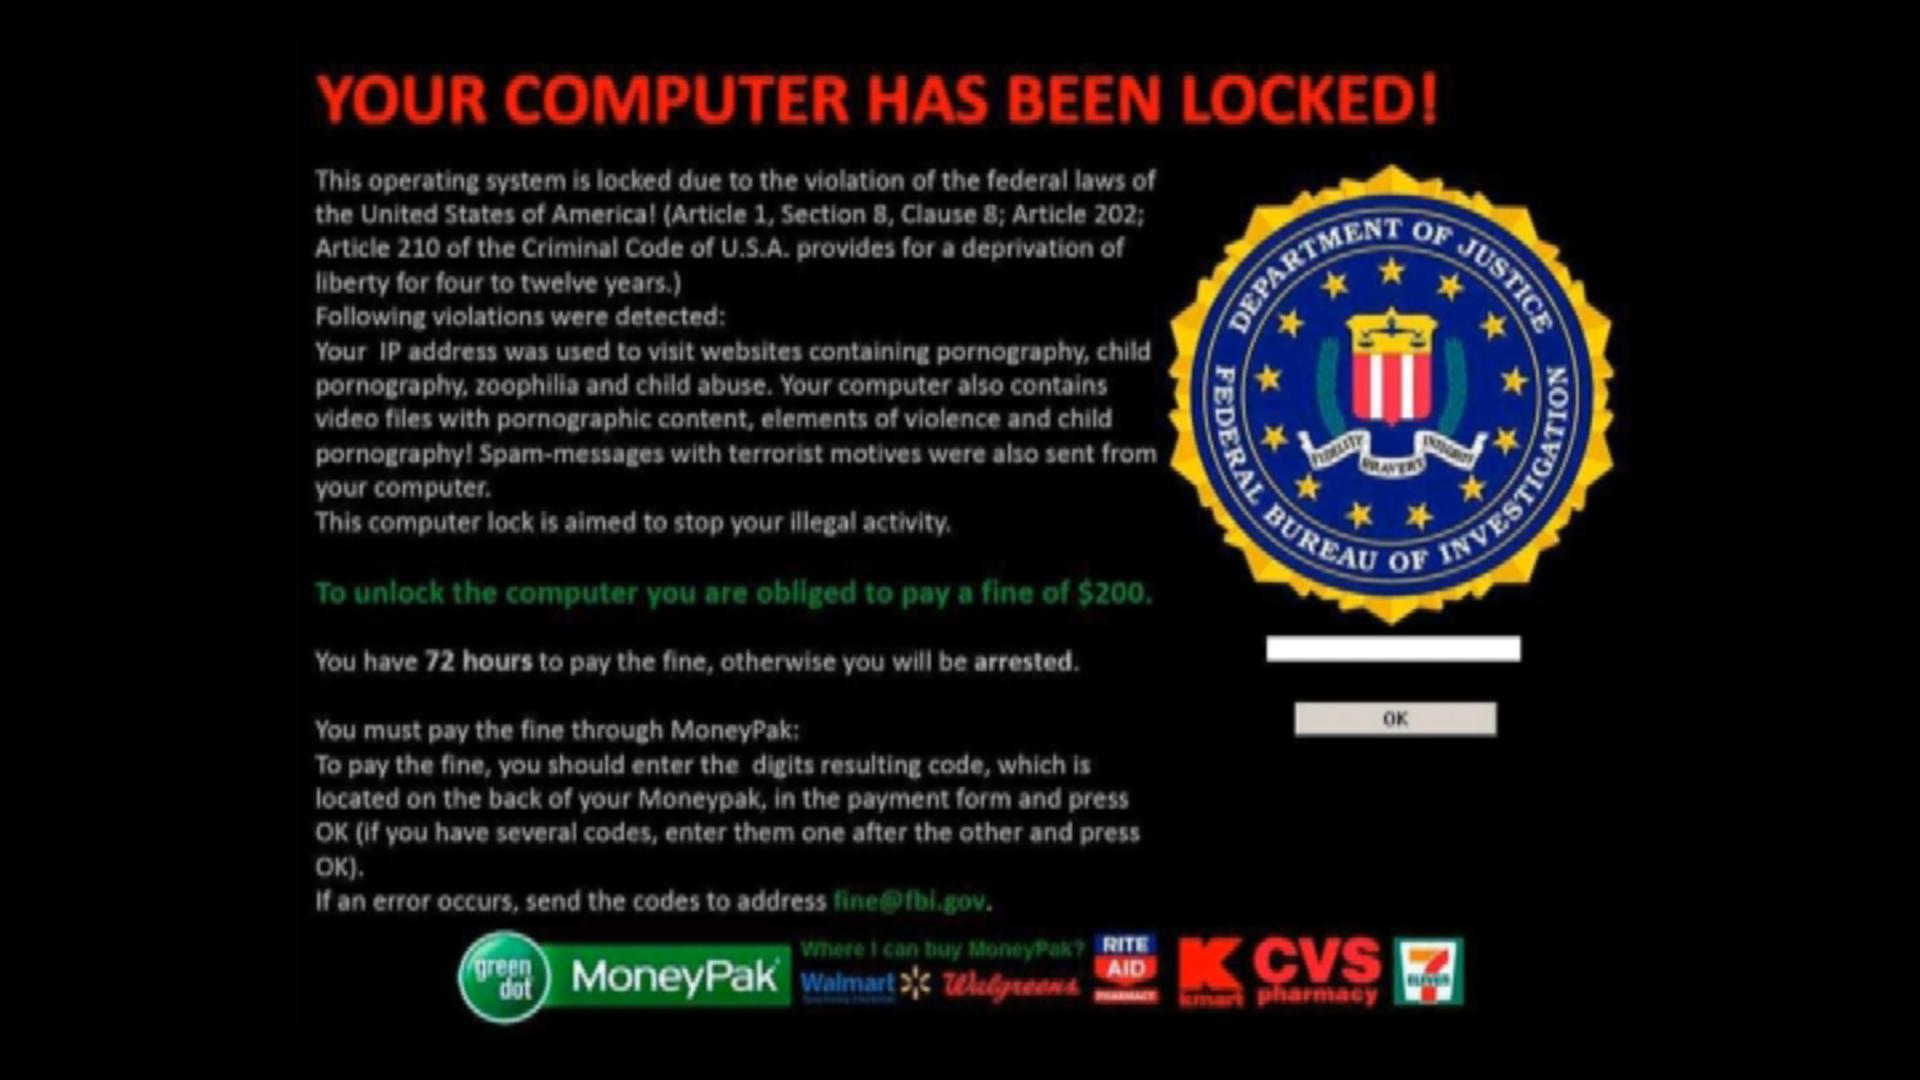 Puter Virus Fbi Screen Lock X Kb Jpeg Hacker